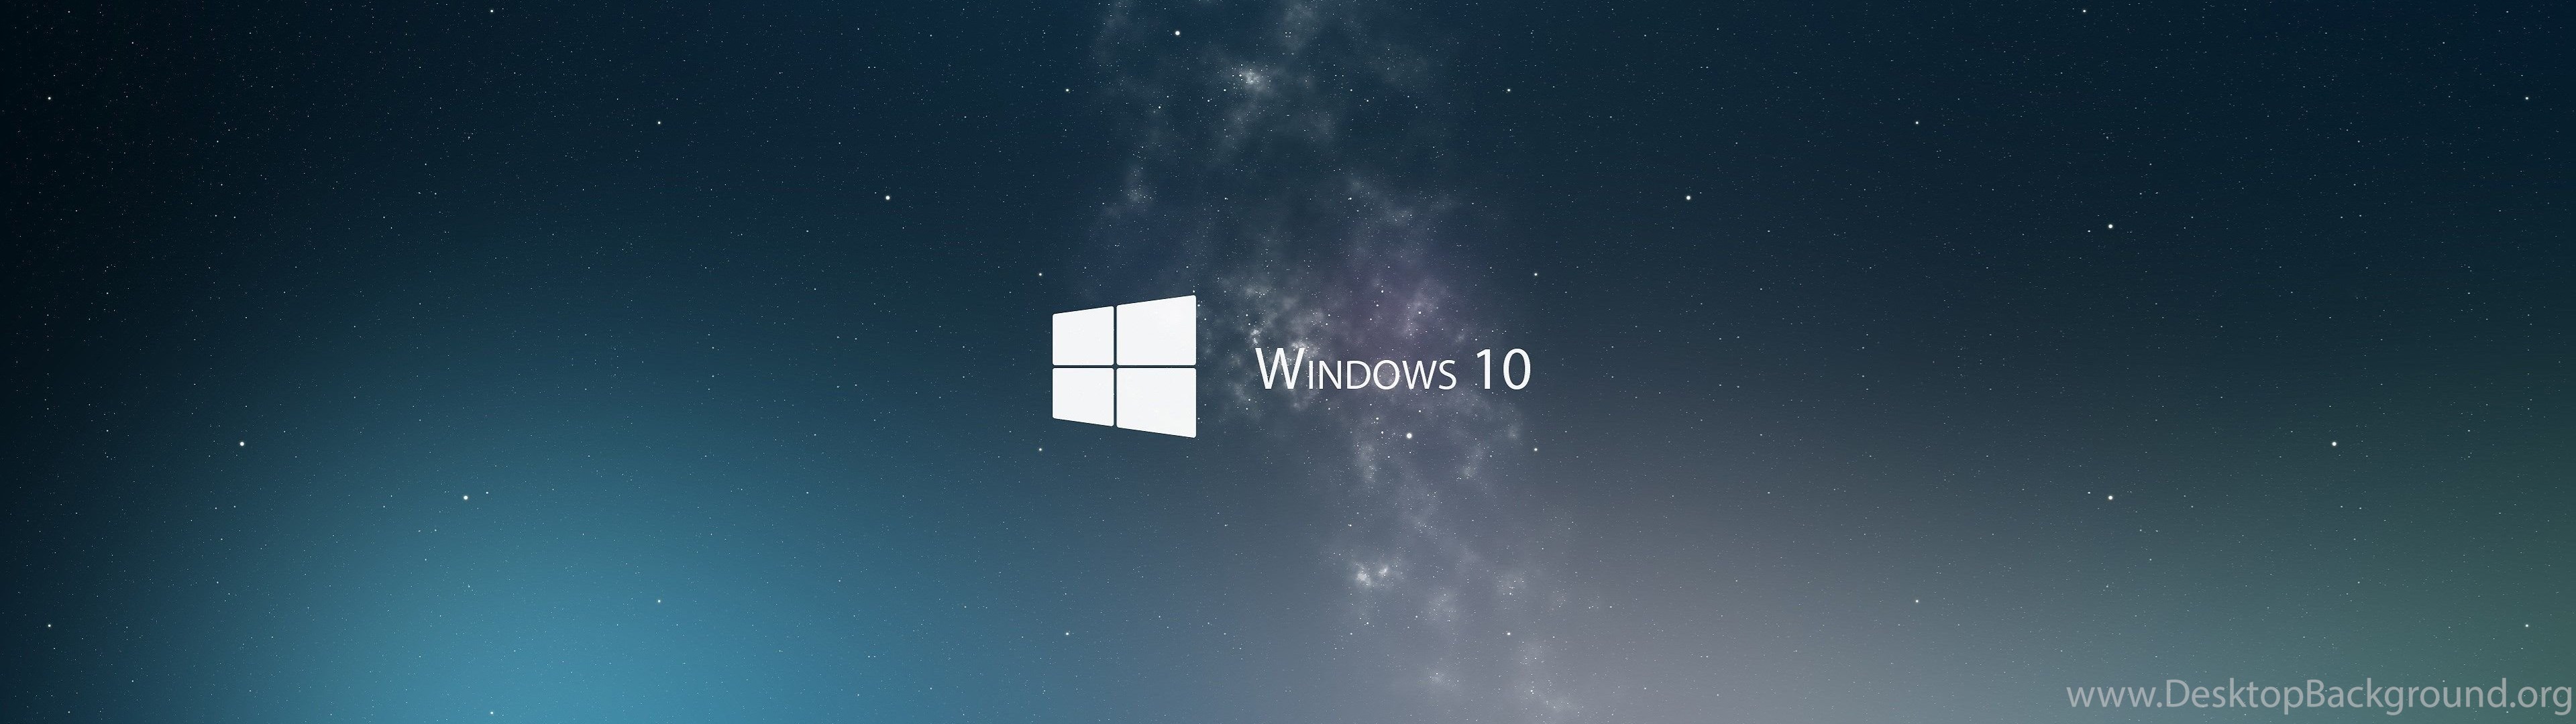 Download Windows 10 4k Ultra Hd Wallpapers Techjeep Desktop Background